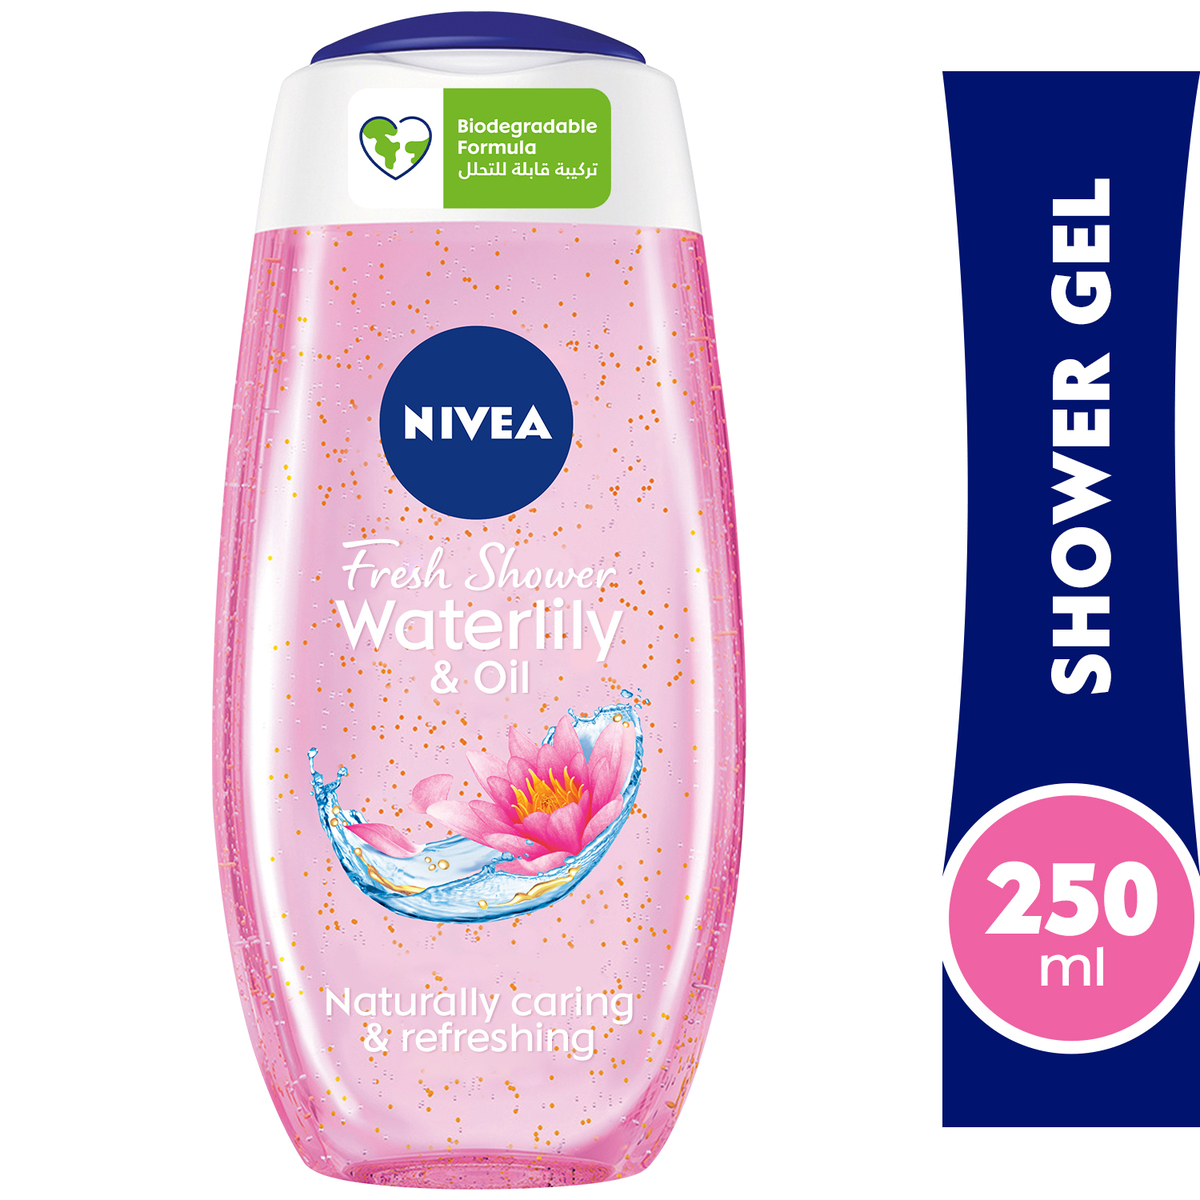 Nivea Waterlily & Oil Fresh Shower 250 ml